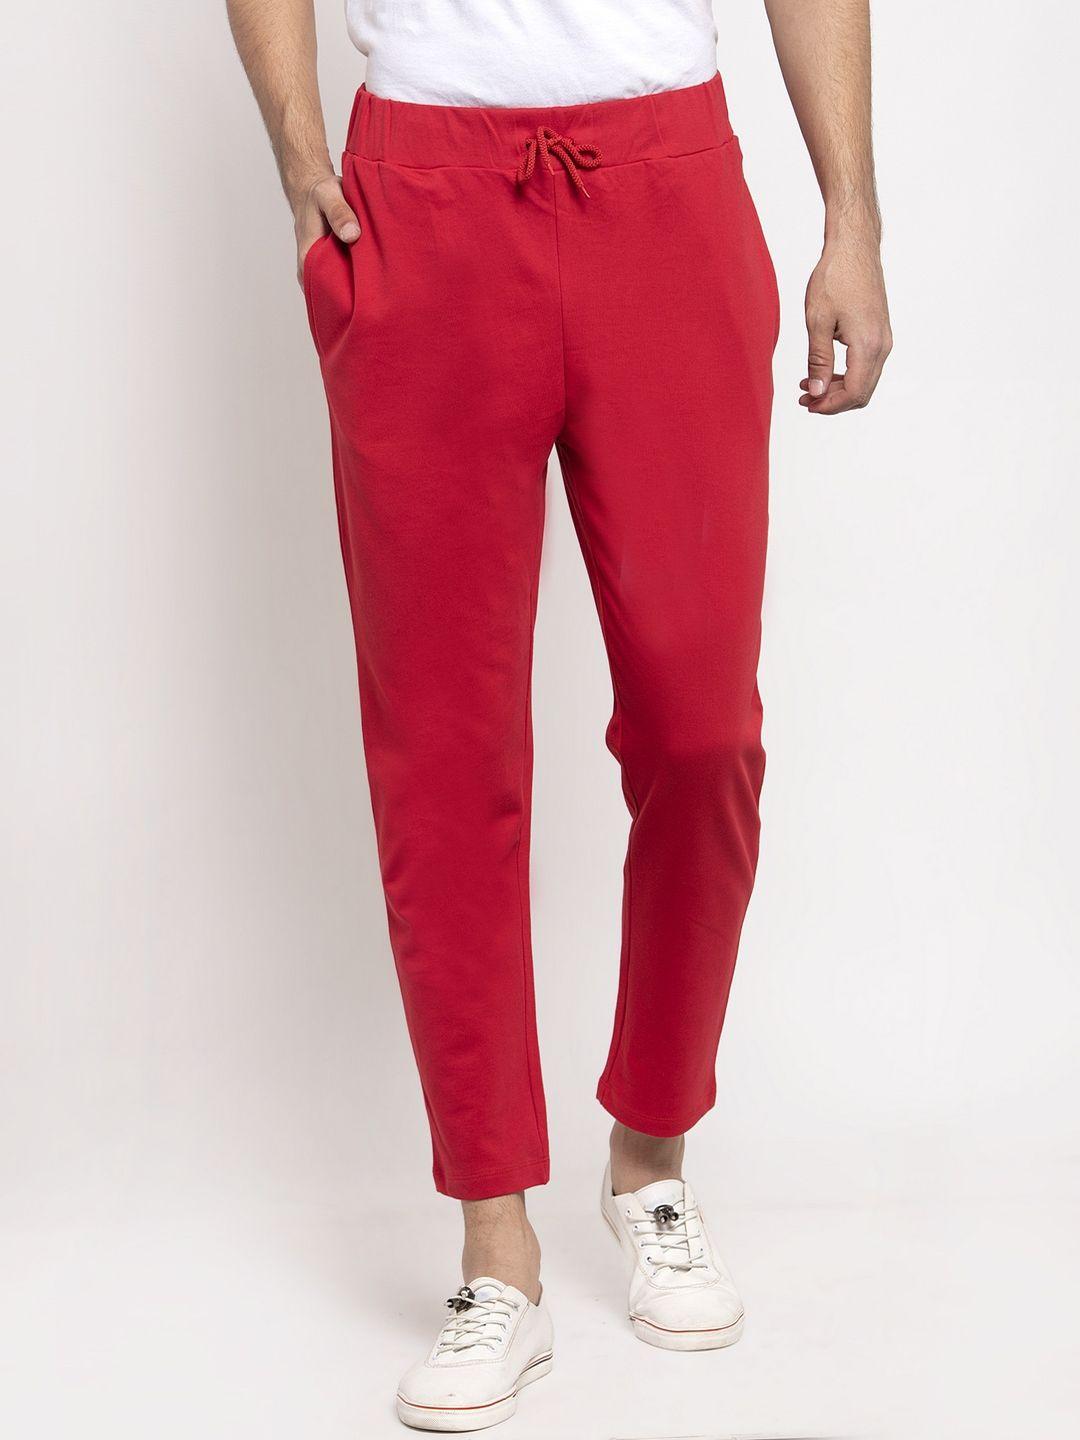 door74-men-red-solid-straight-fit-track-pants